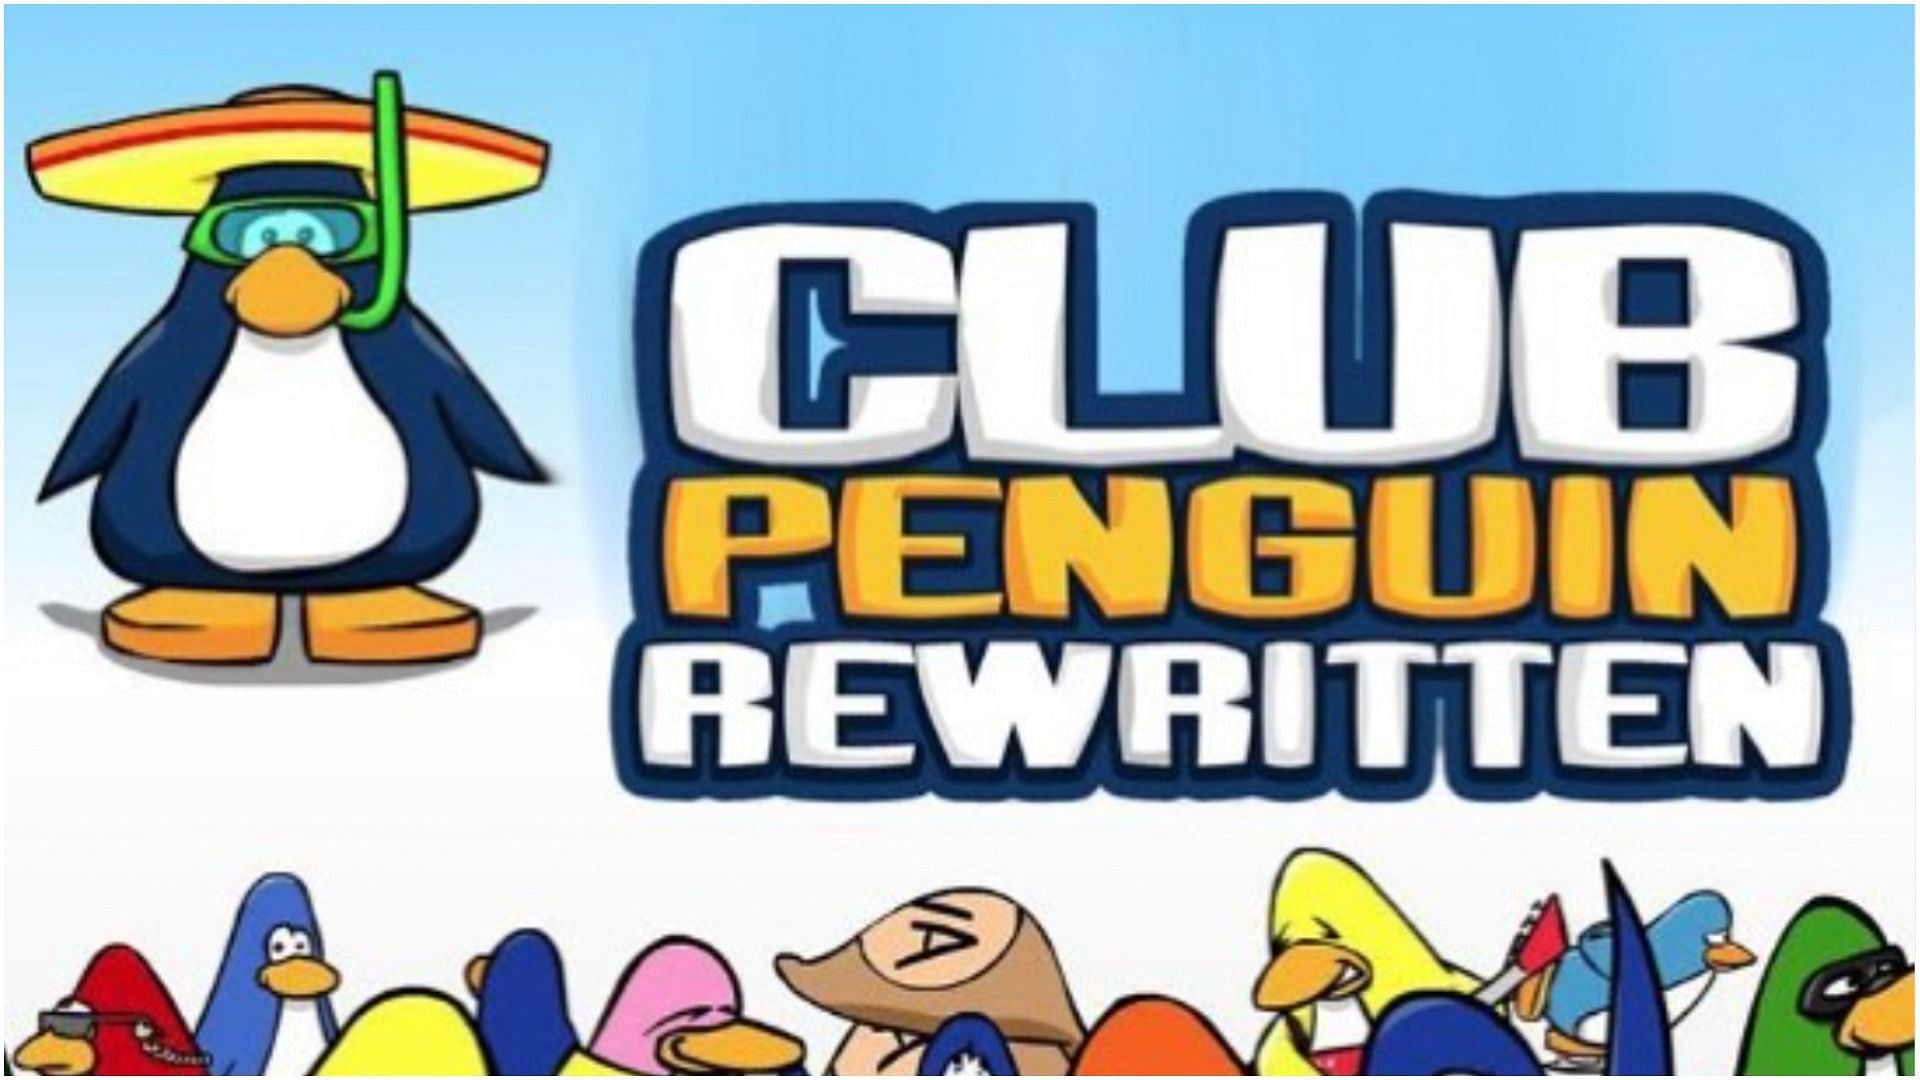 Why was Club Penguin Rewritten shut down? Three people arrested on  suspicion of copyright infringement